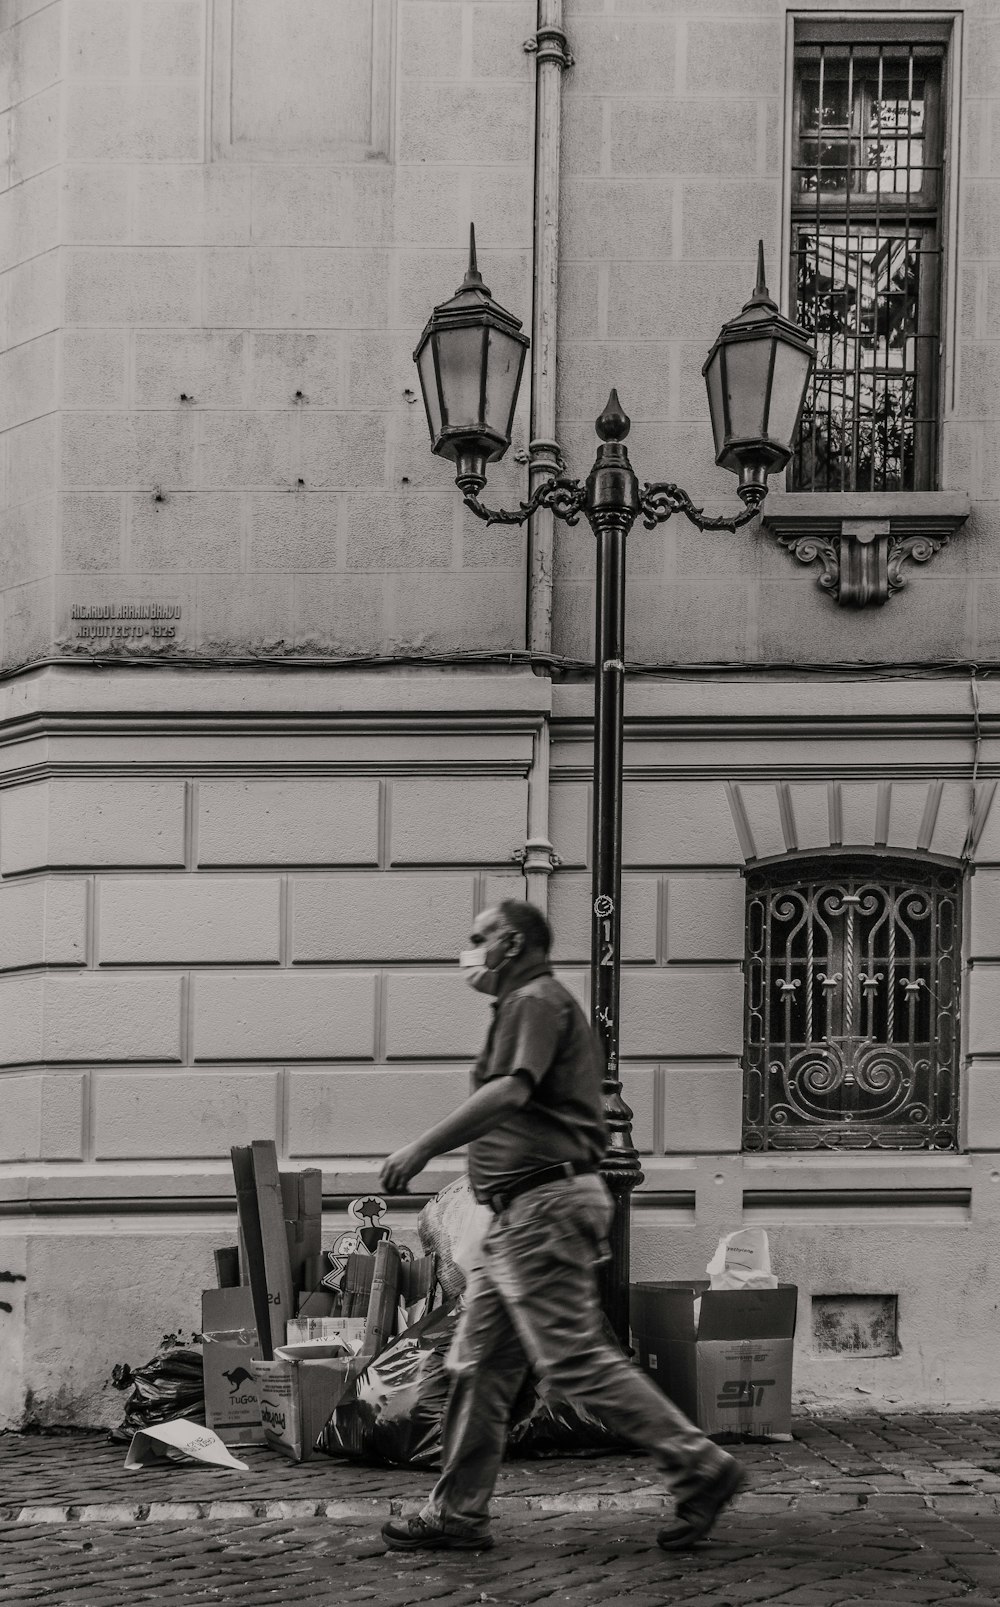 grayscale photo of man sitting on bench near street light